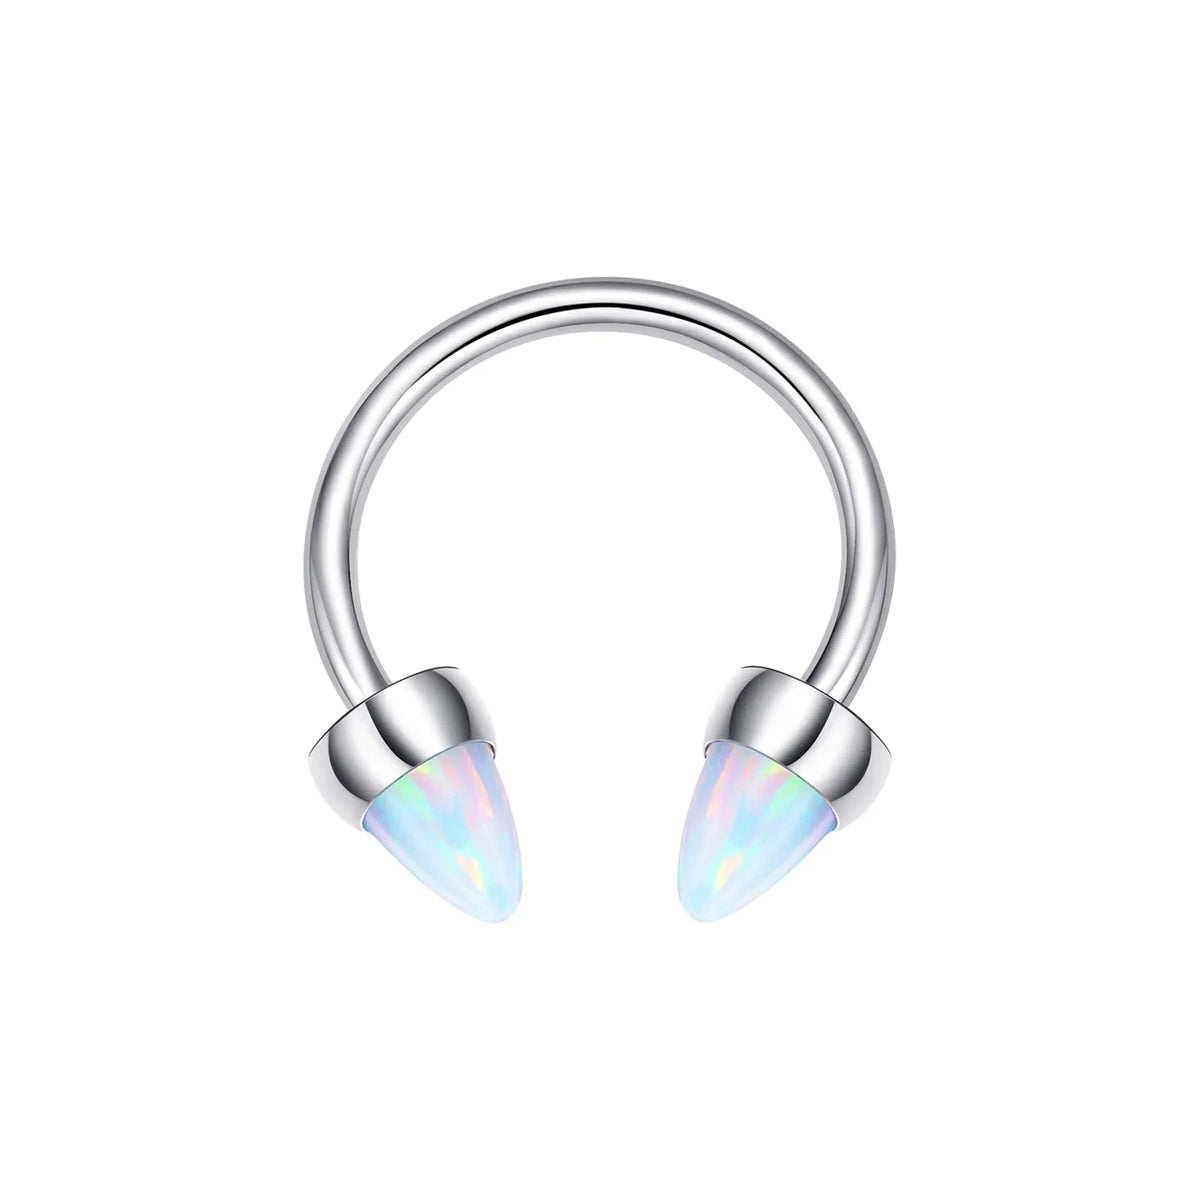 Opal nose hoop with spikes titanium septum ring horseshoe barbell 16G blue opal white opal purple opal